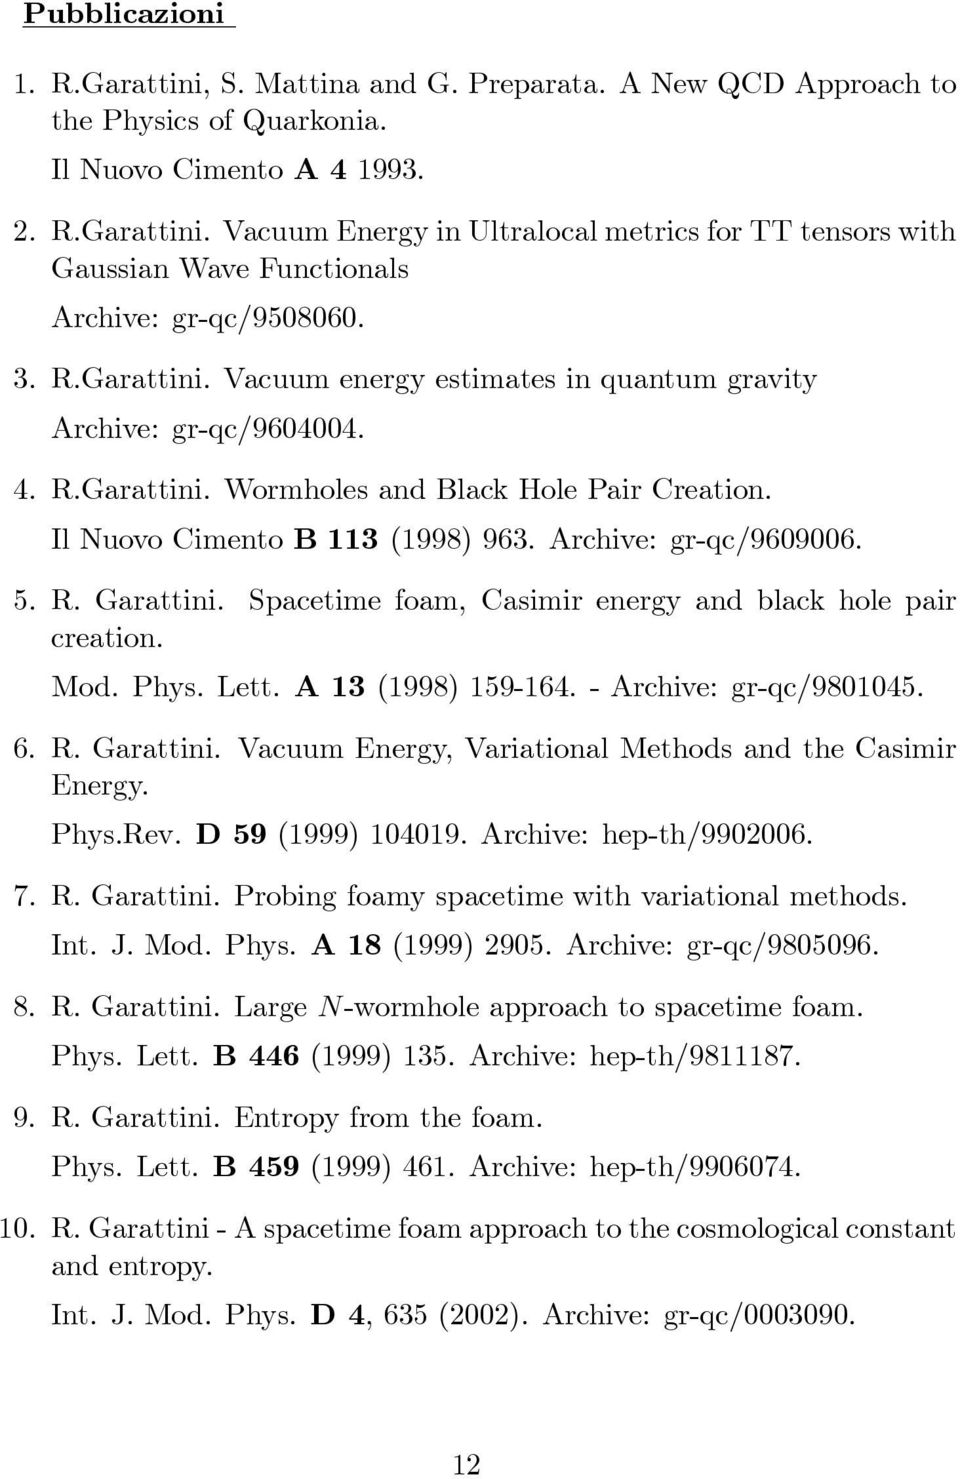 R. Garattini. Spacetime foam, Casimir energy and black hole pair creation. Mod. Phys. Lett. A13(1998) 159-164. - Archive: gr-qc/9801045. 6. R. Garattini. Vacuum Energy, Variational Methods and the Casimir Energy.